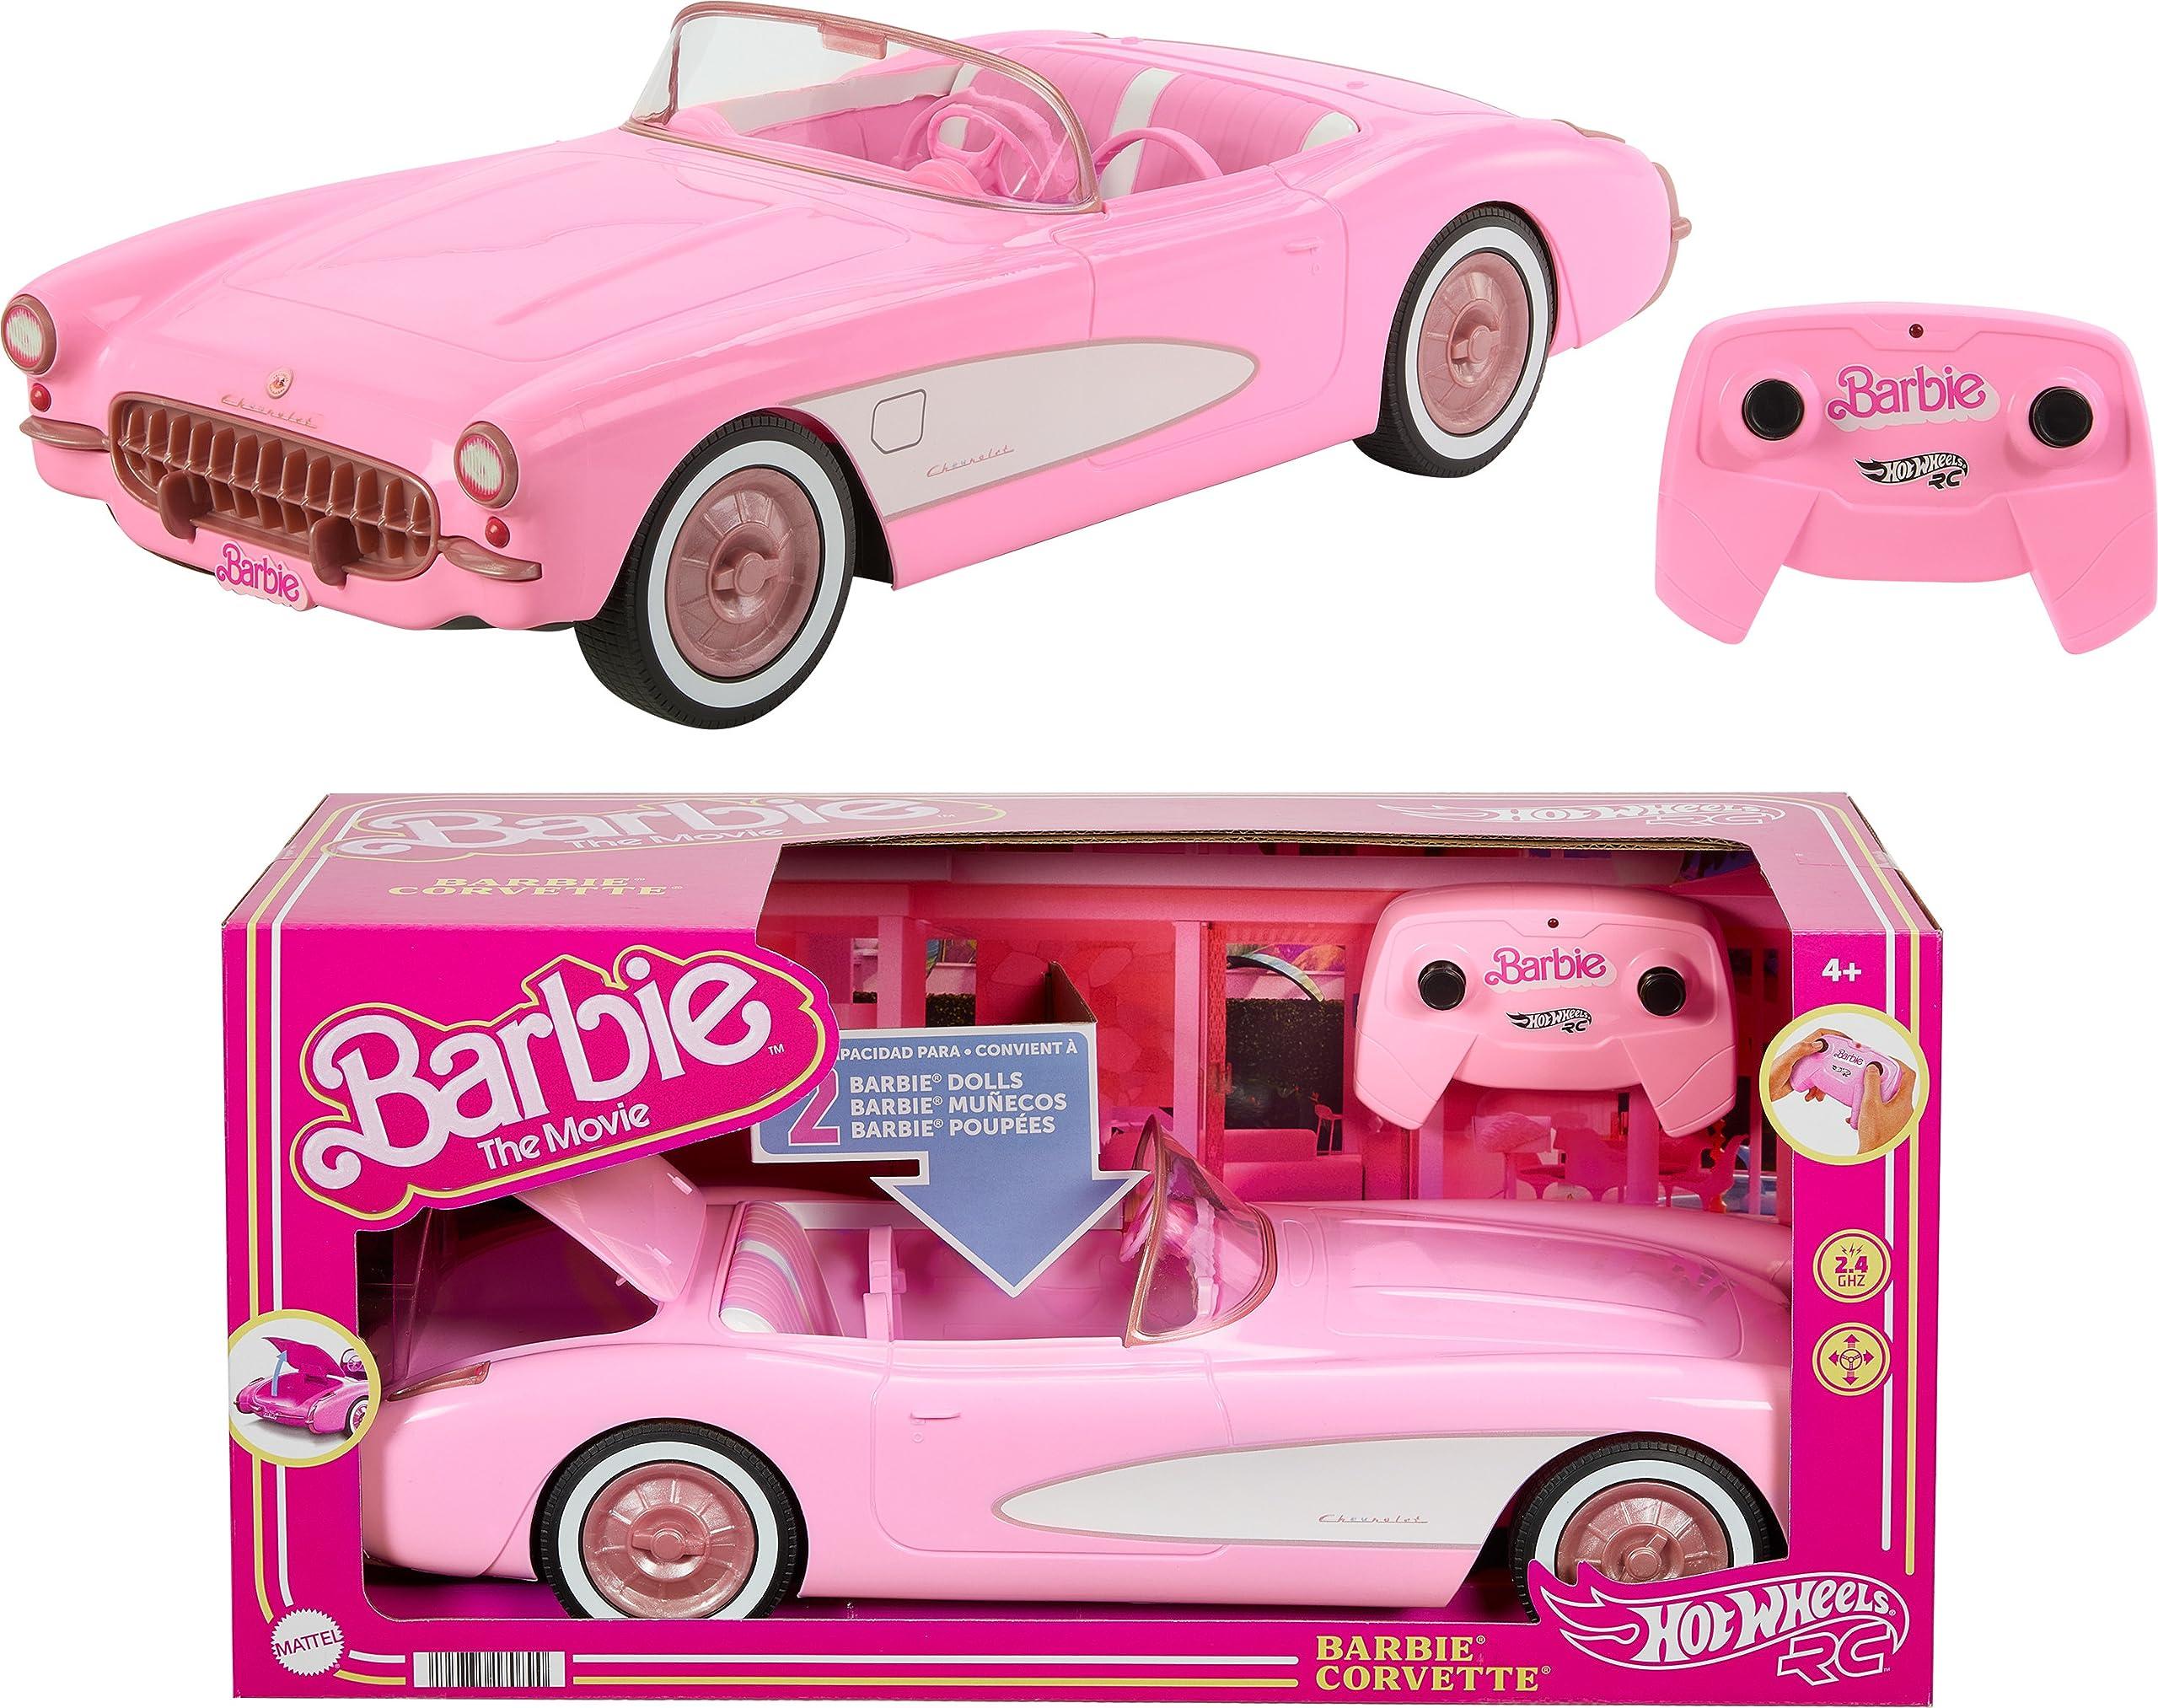 Remote Control Barbie Doll: Comparing Remote Control Dolls.